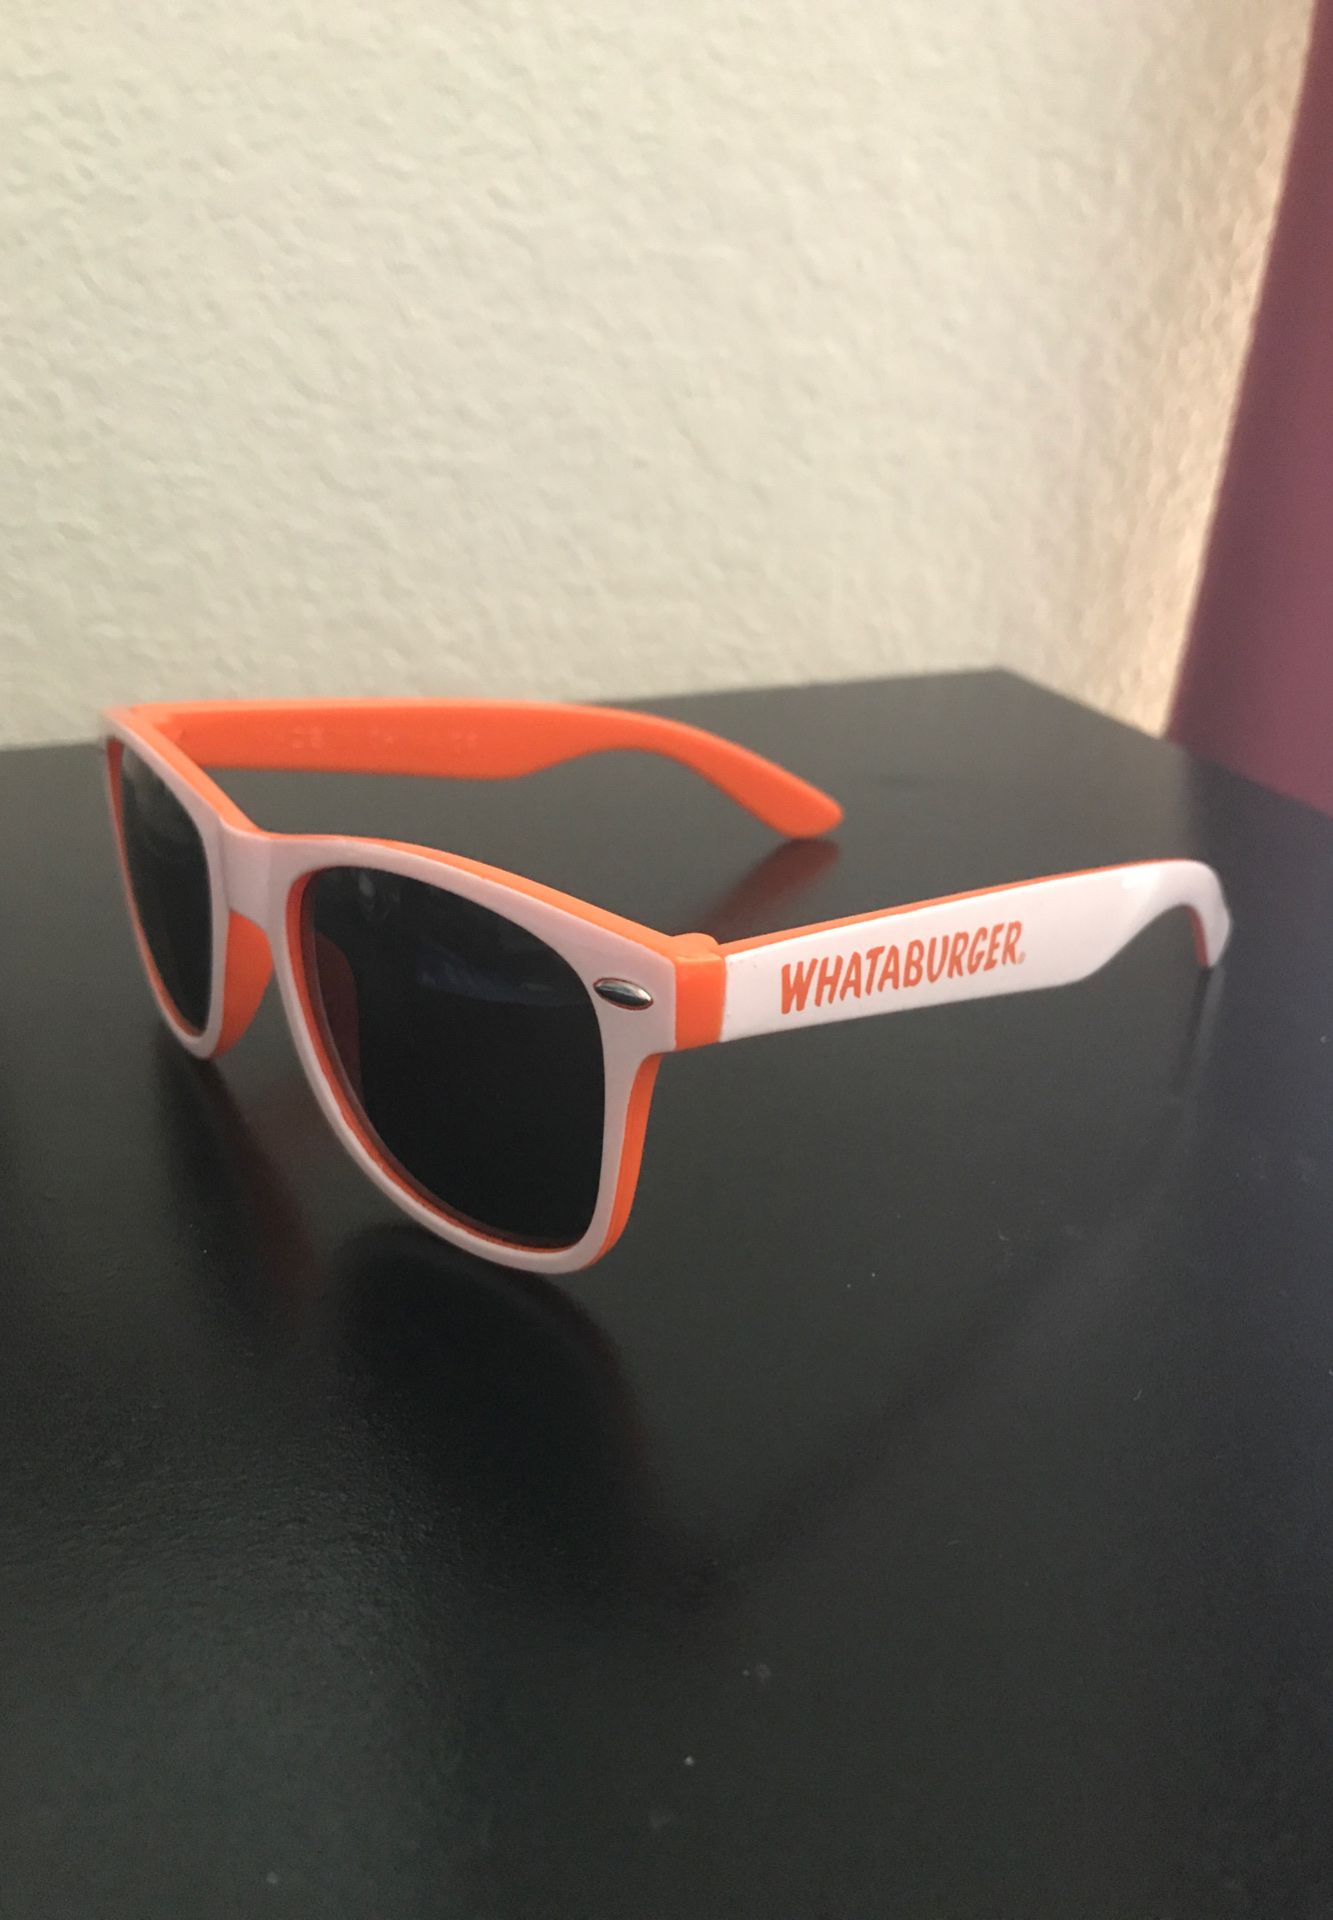 Whataburger sunglasses